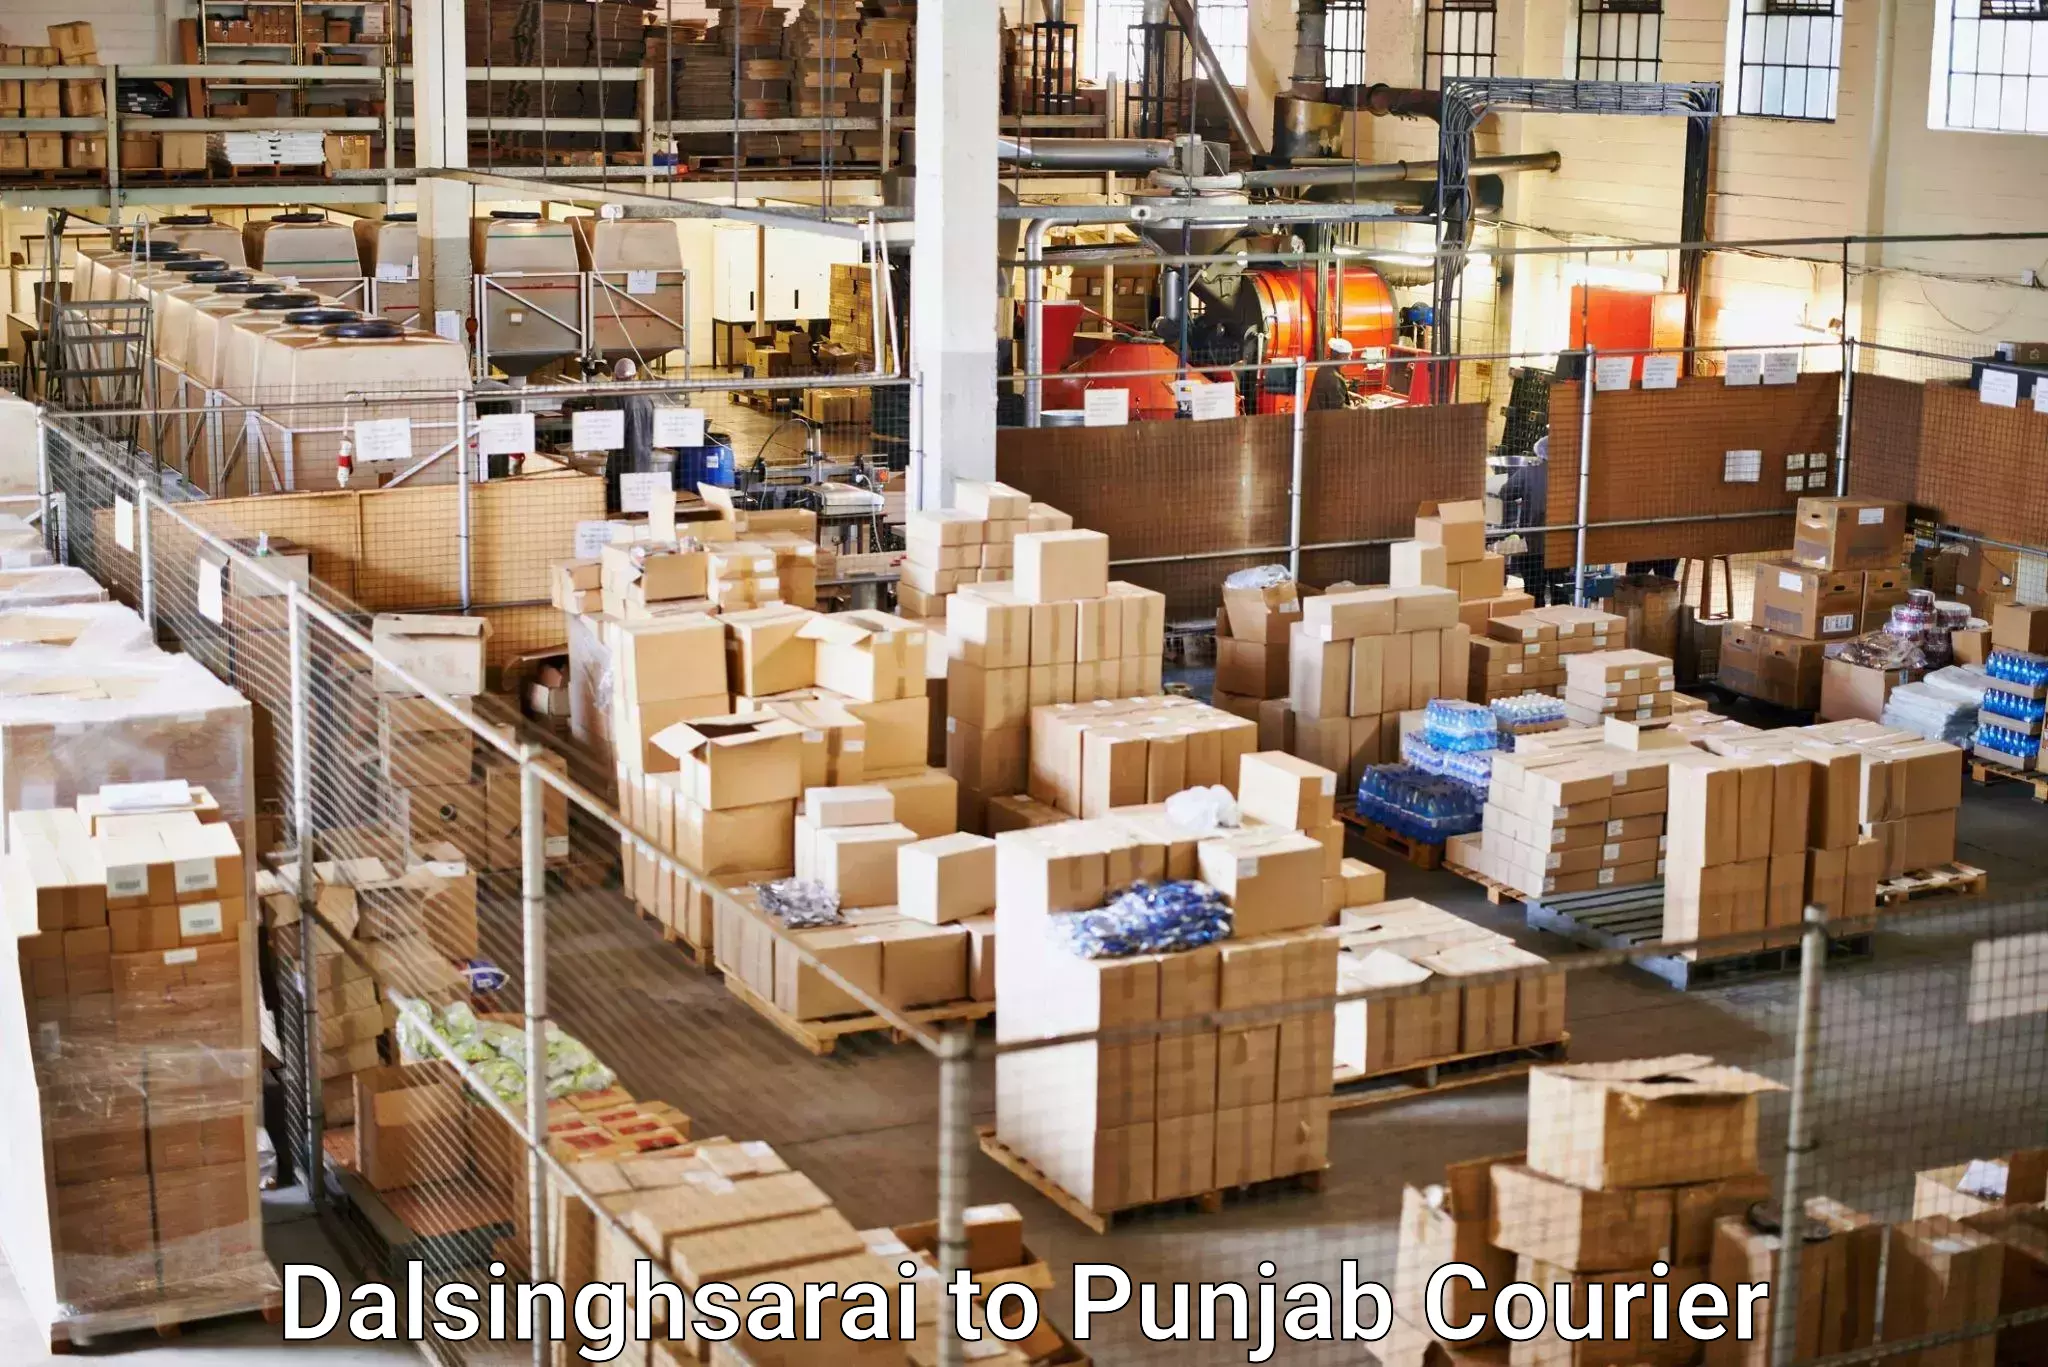 International parcel service Dalsinghsarai to Dera Bassi